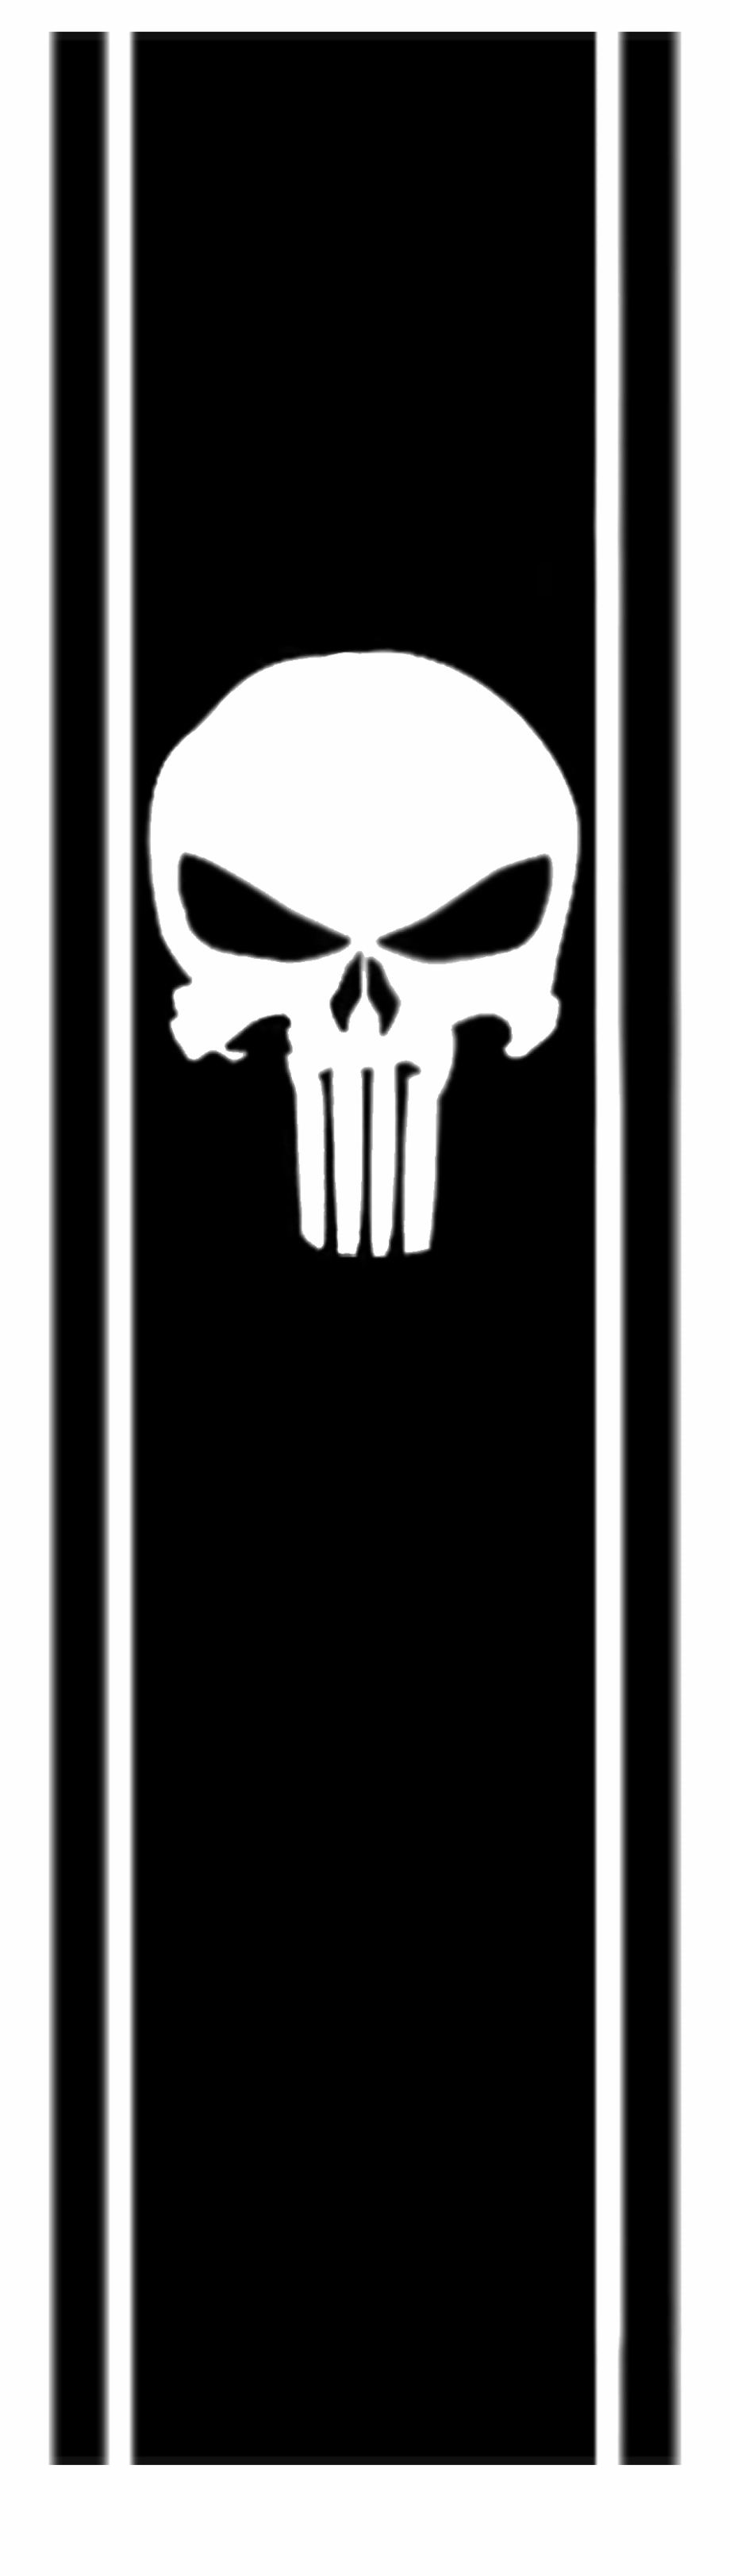 Punisher Skull Bed Panel Decals Punisher Skull